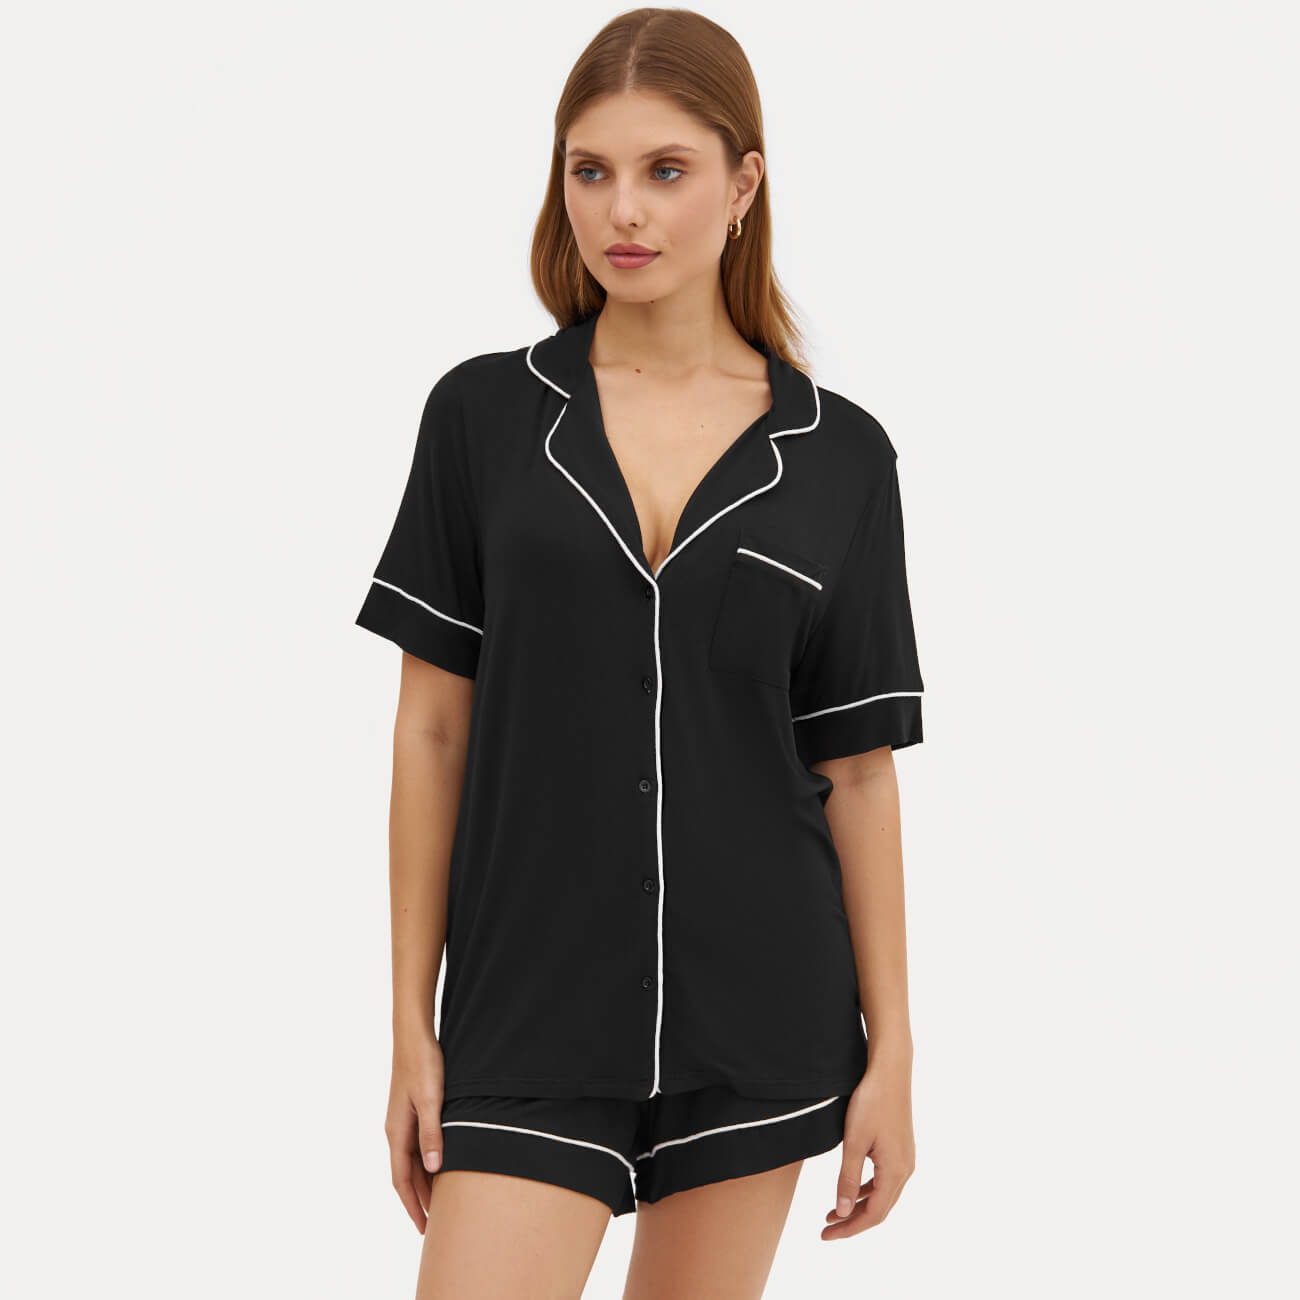 Рубашка женская, домашняя, р. XL, с коротким рукавом, вискоза/эластан, черная, Rabia